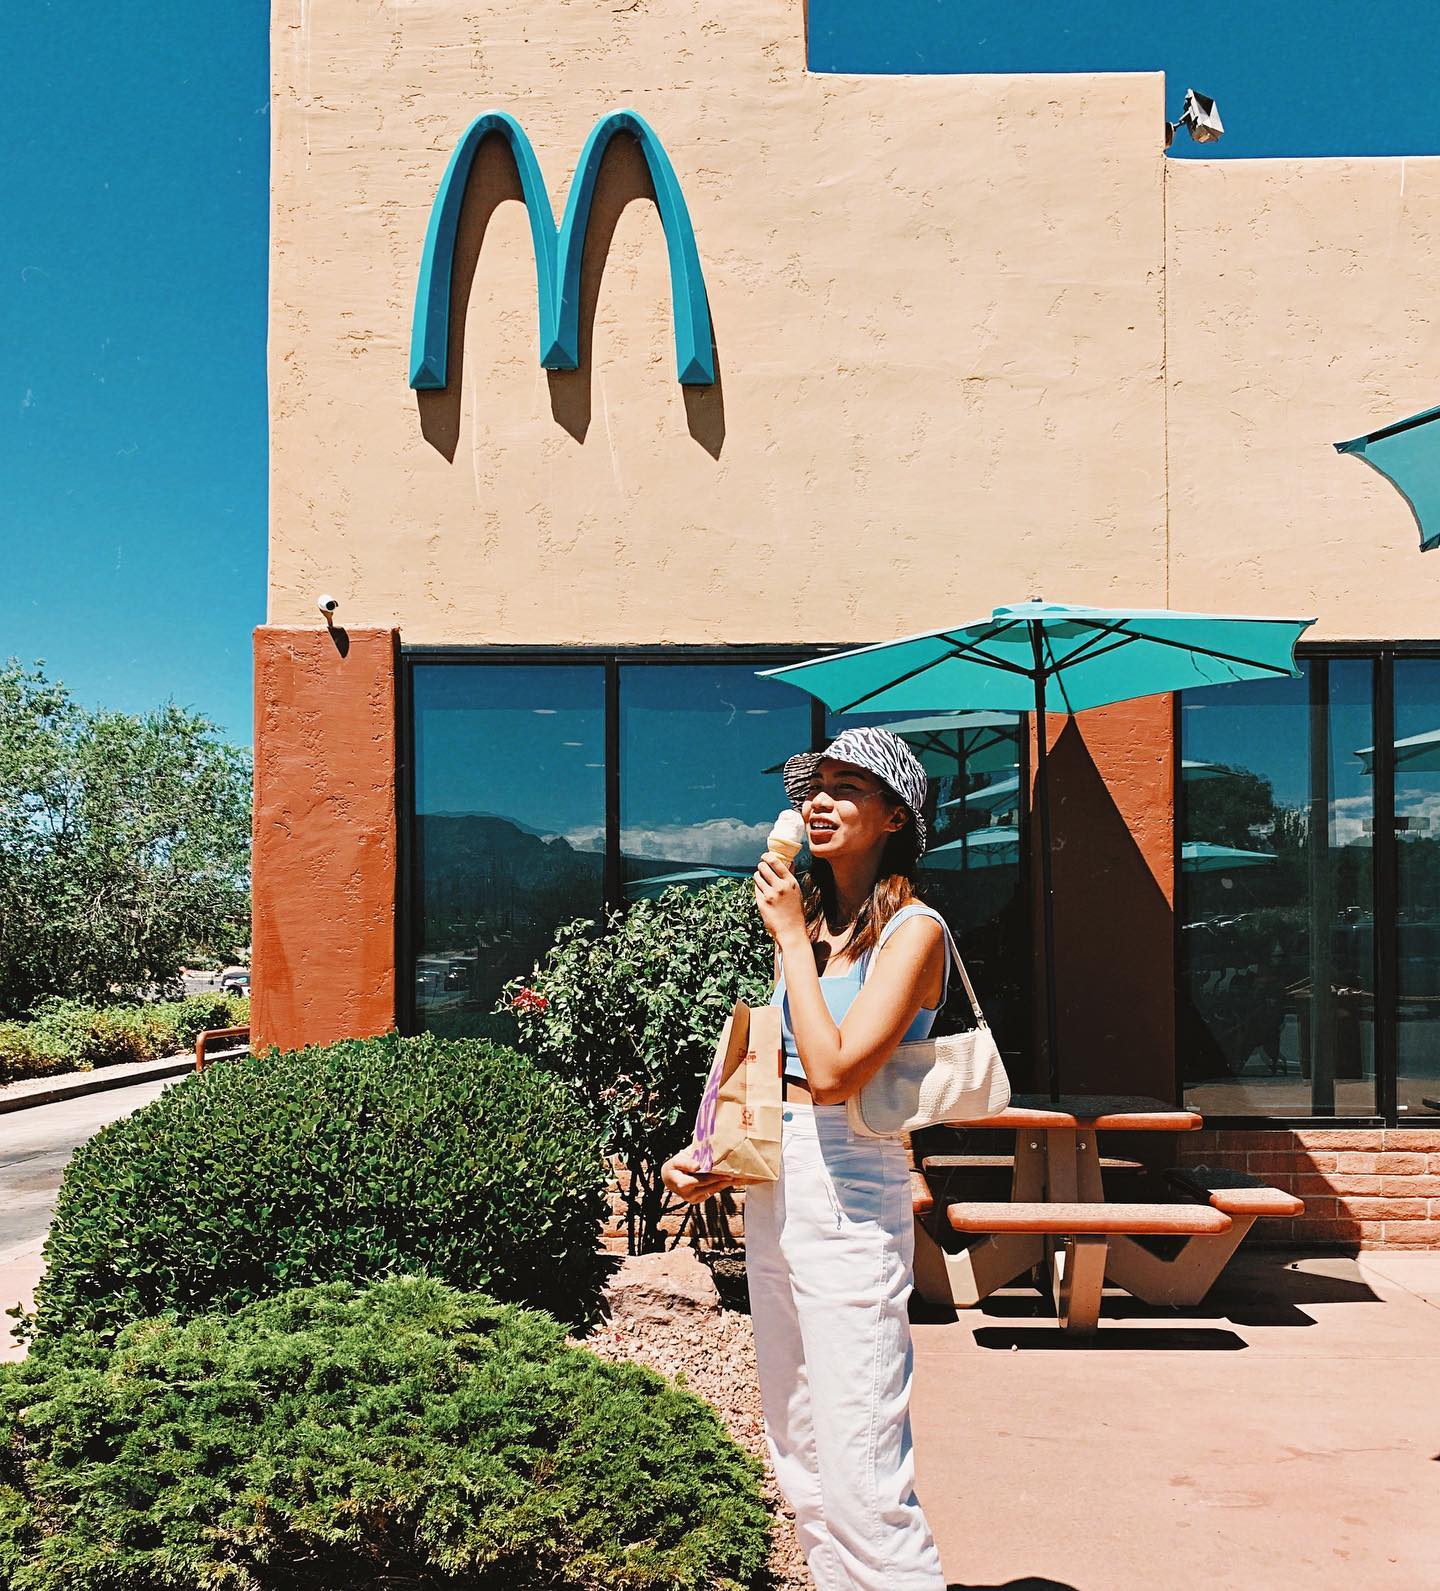 Unique McDonald's Around The World Turquoise Arches USA